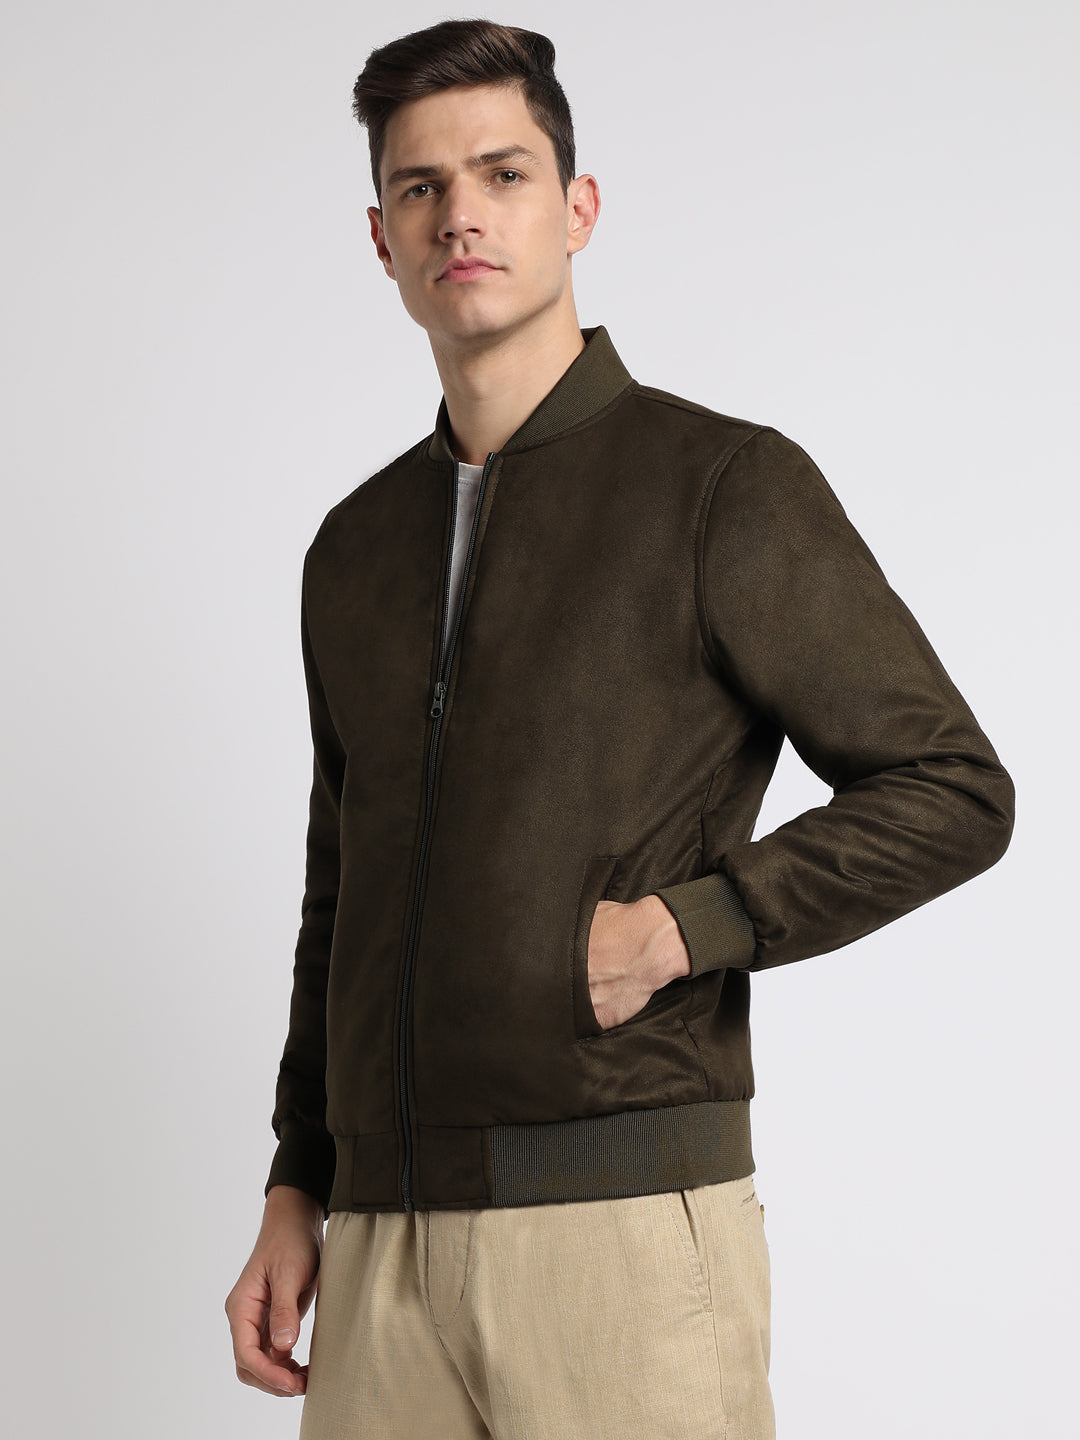 Dennis Lingo Men's Olive Solid Rib Collar Full Sleeve Light weight jacket Jackets